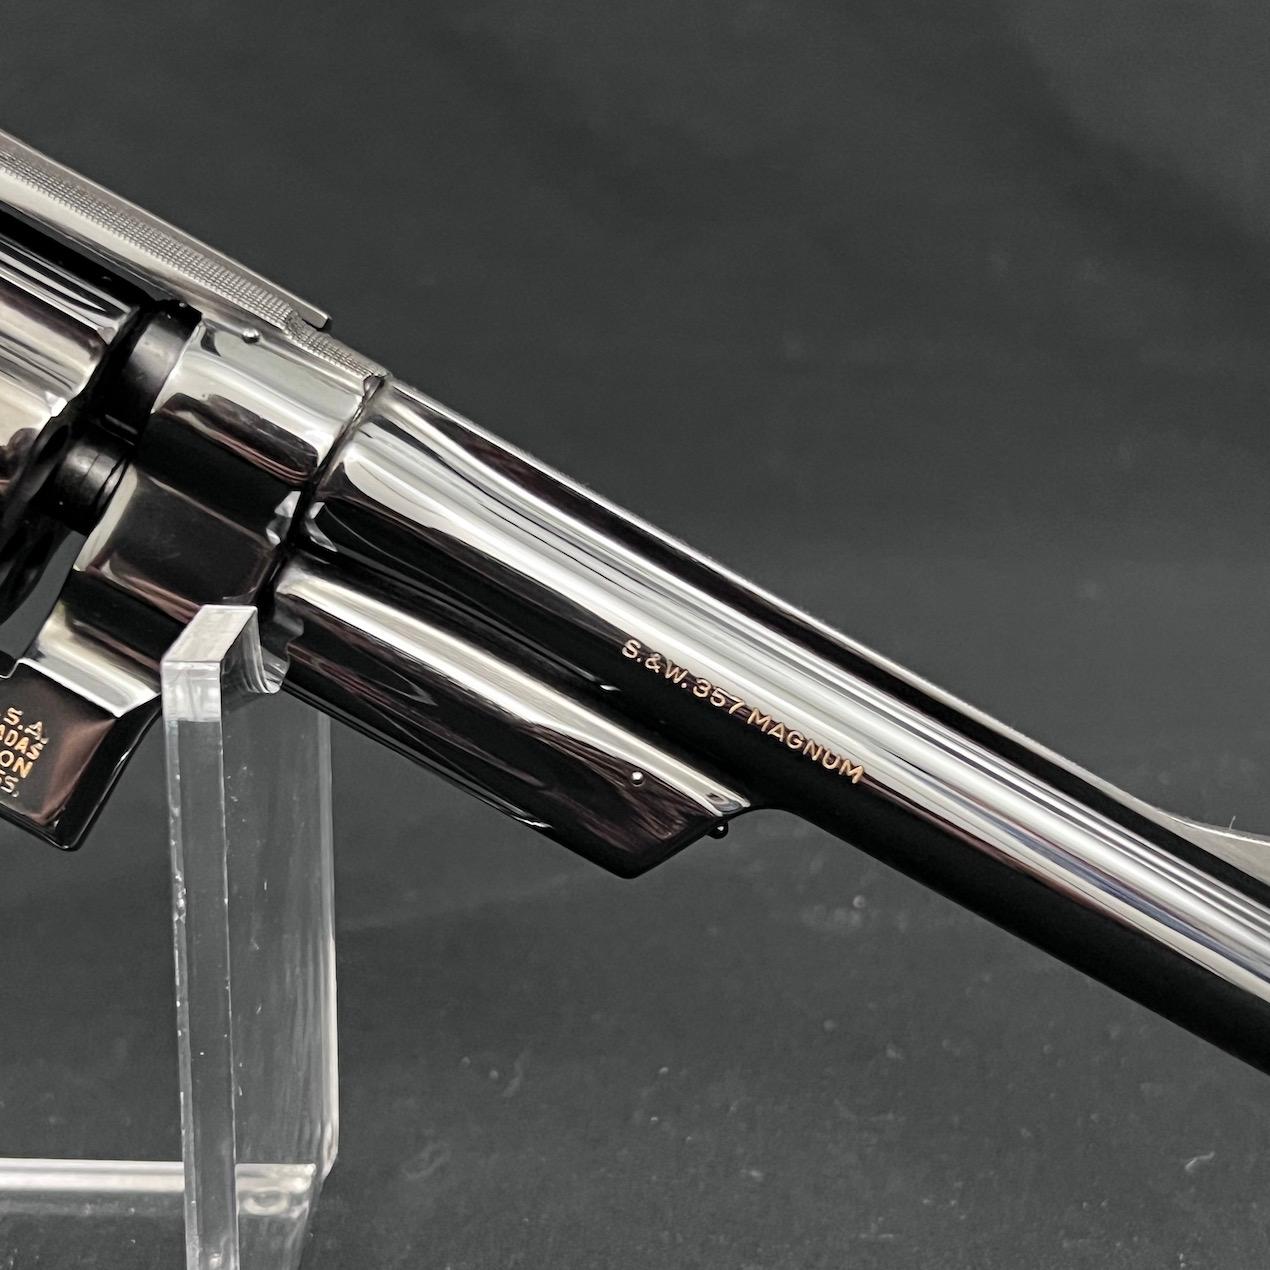 Smith & Wesson 27-2 Revolver